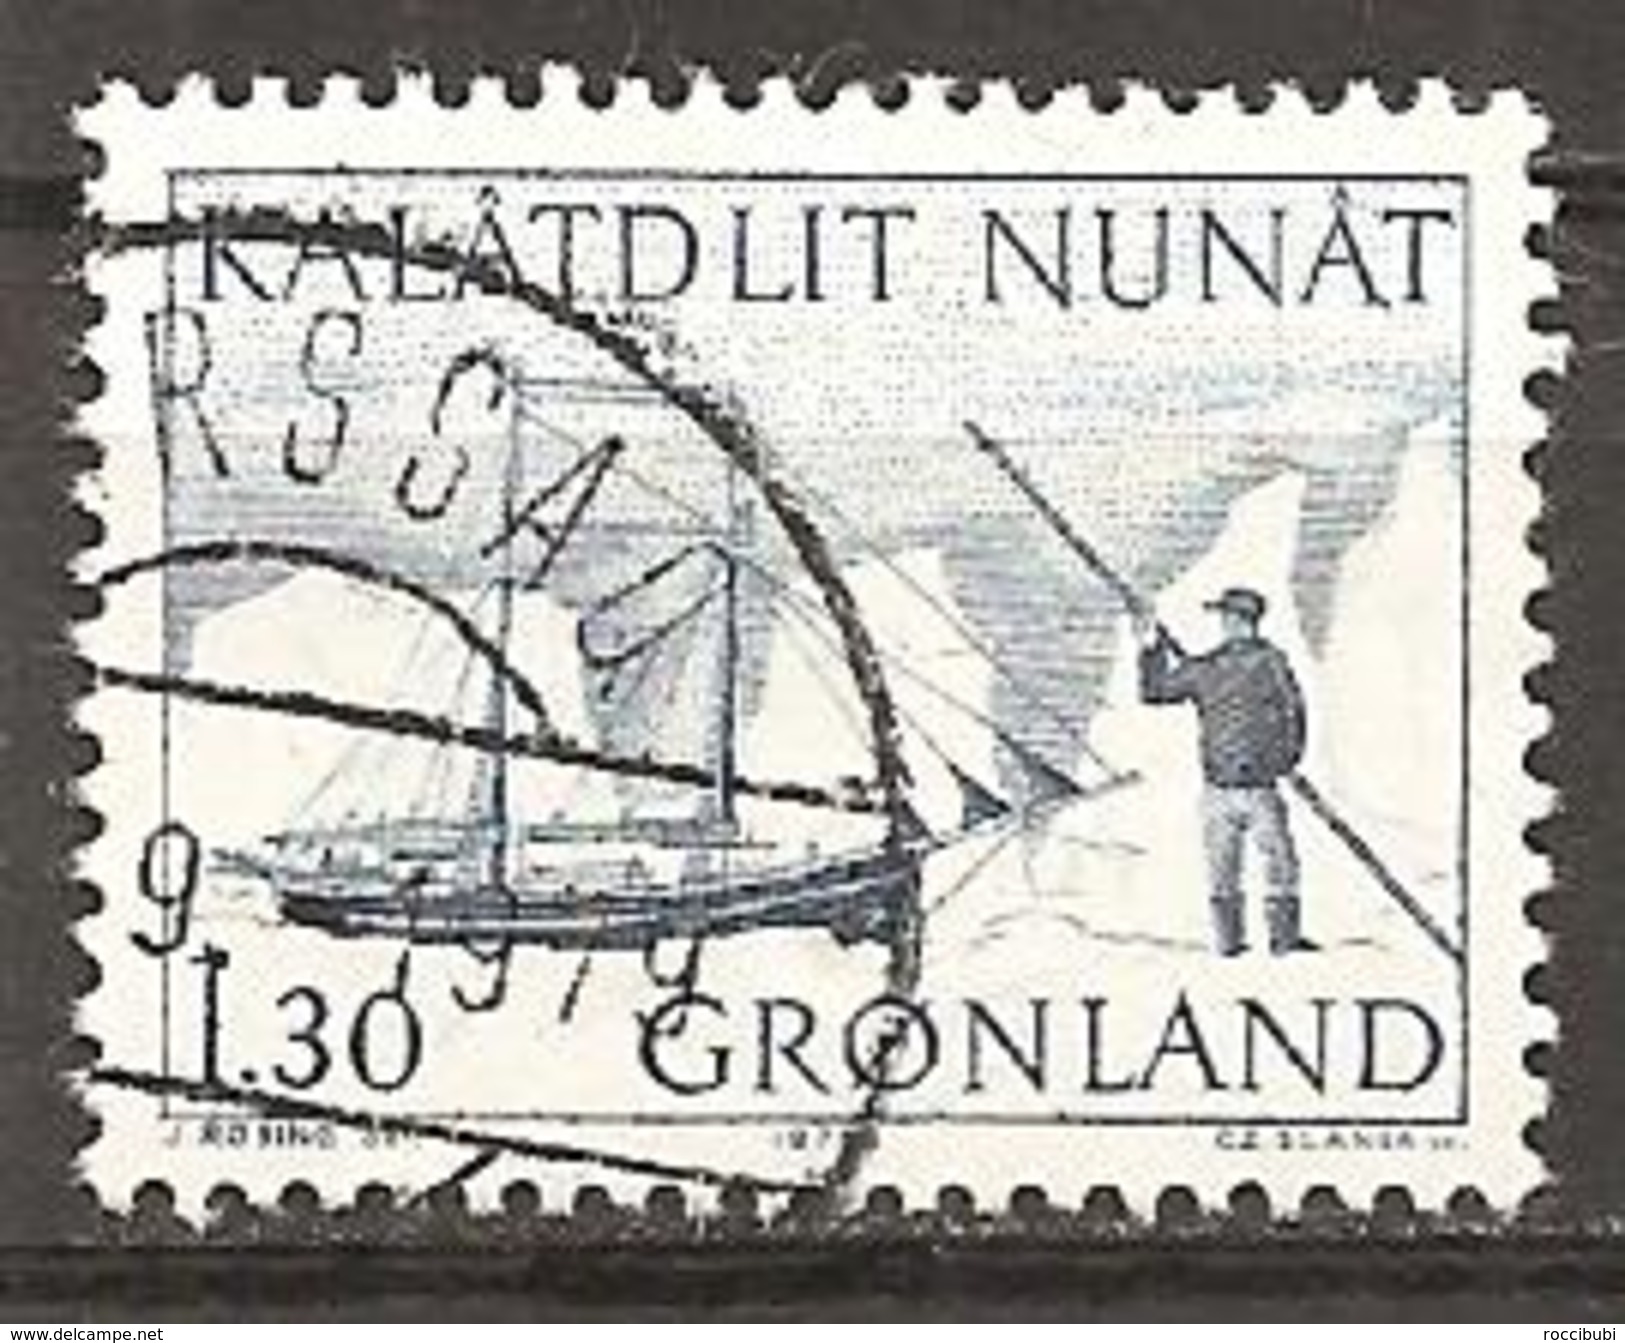 Grönland 1975 // Michel 93 O - Usados